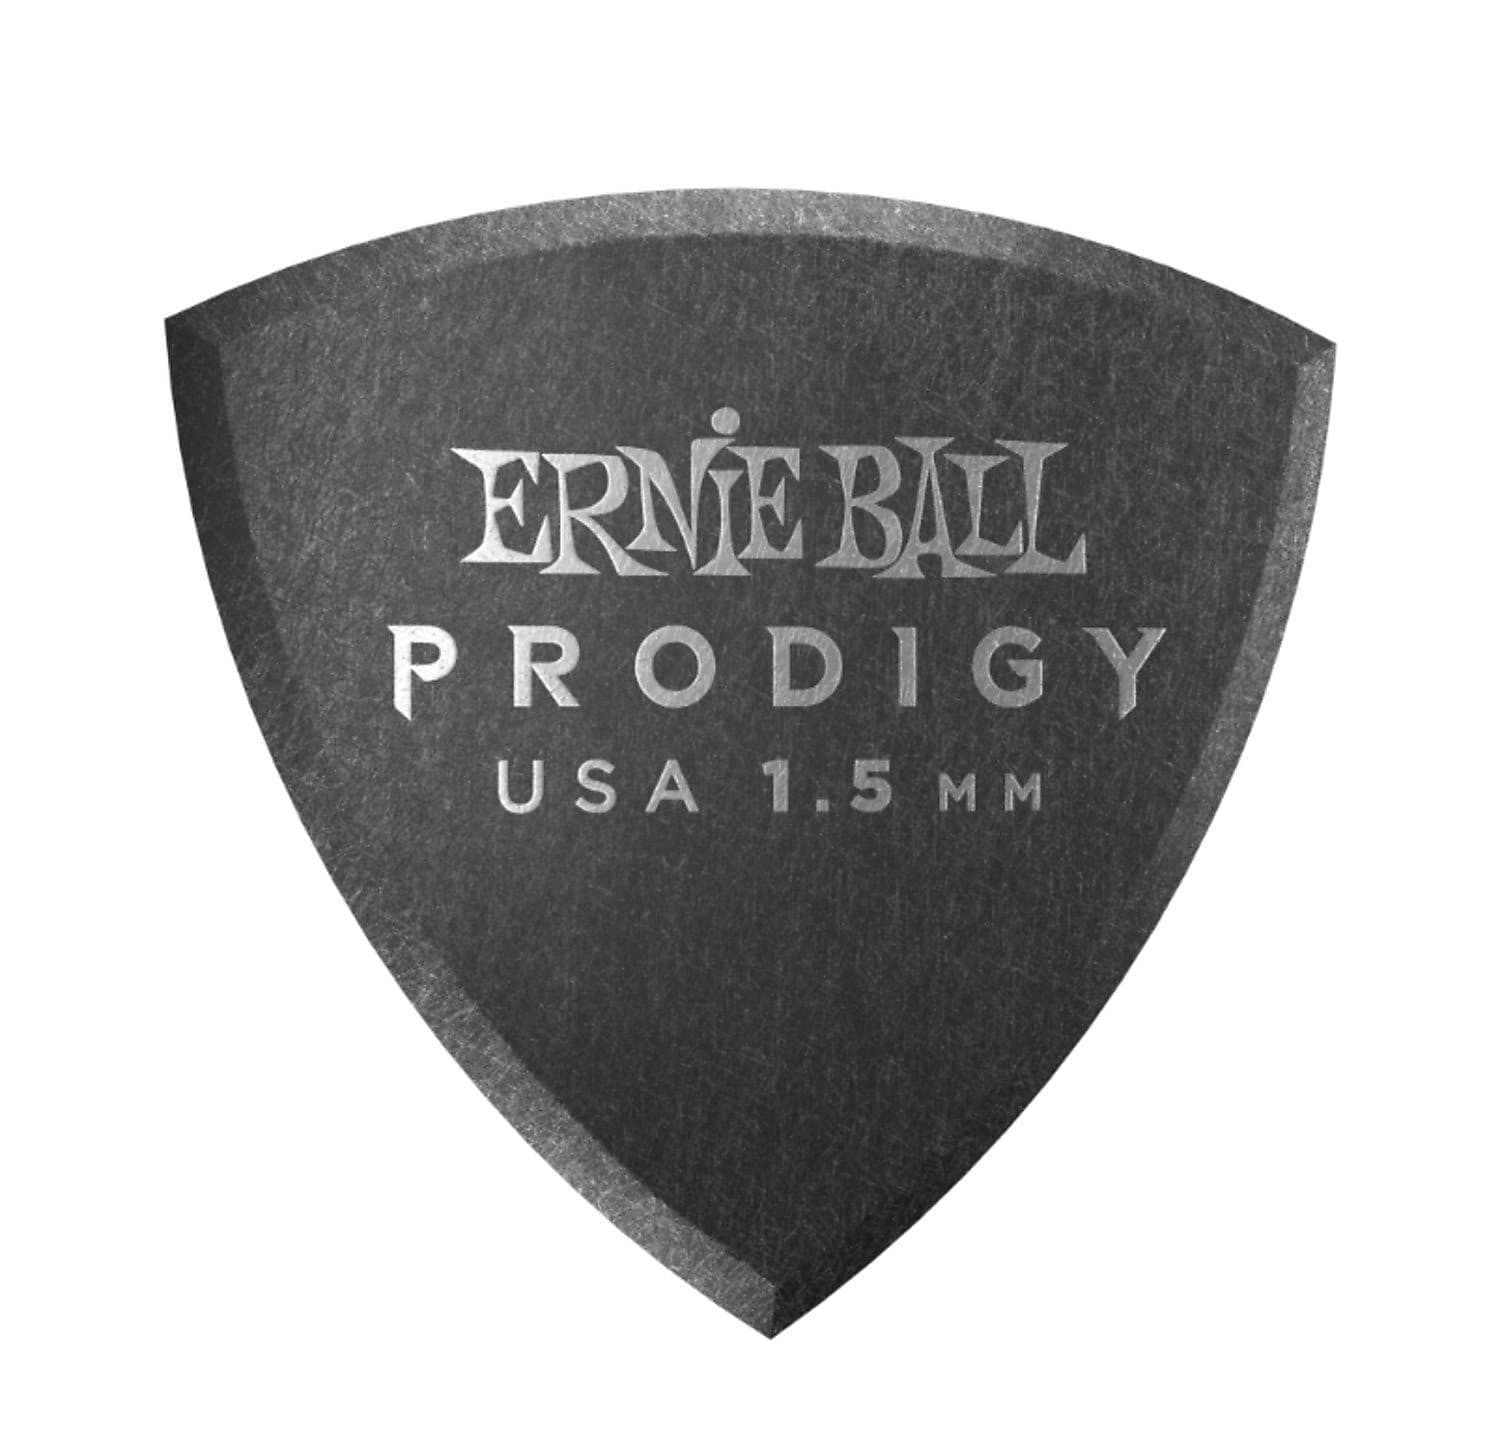 Ernie Ball 9331 1.5mm Black Shield Prodigy Picks 6-pack